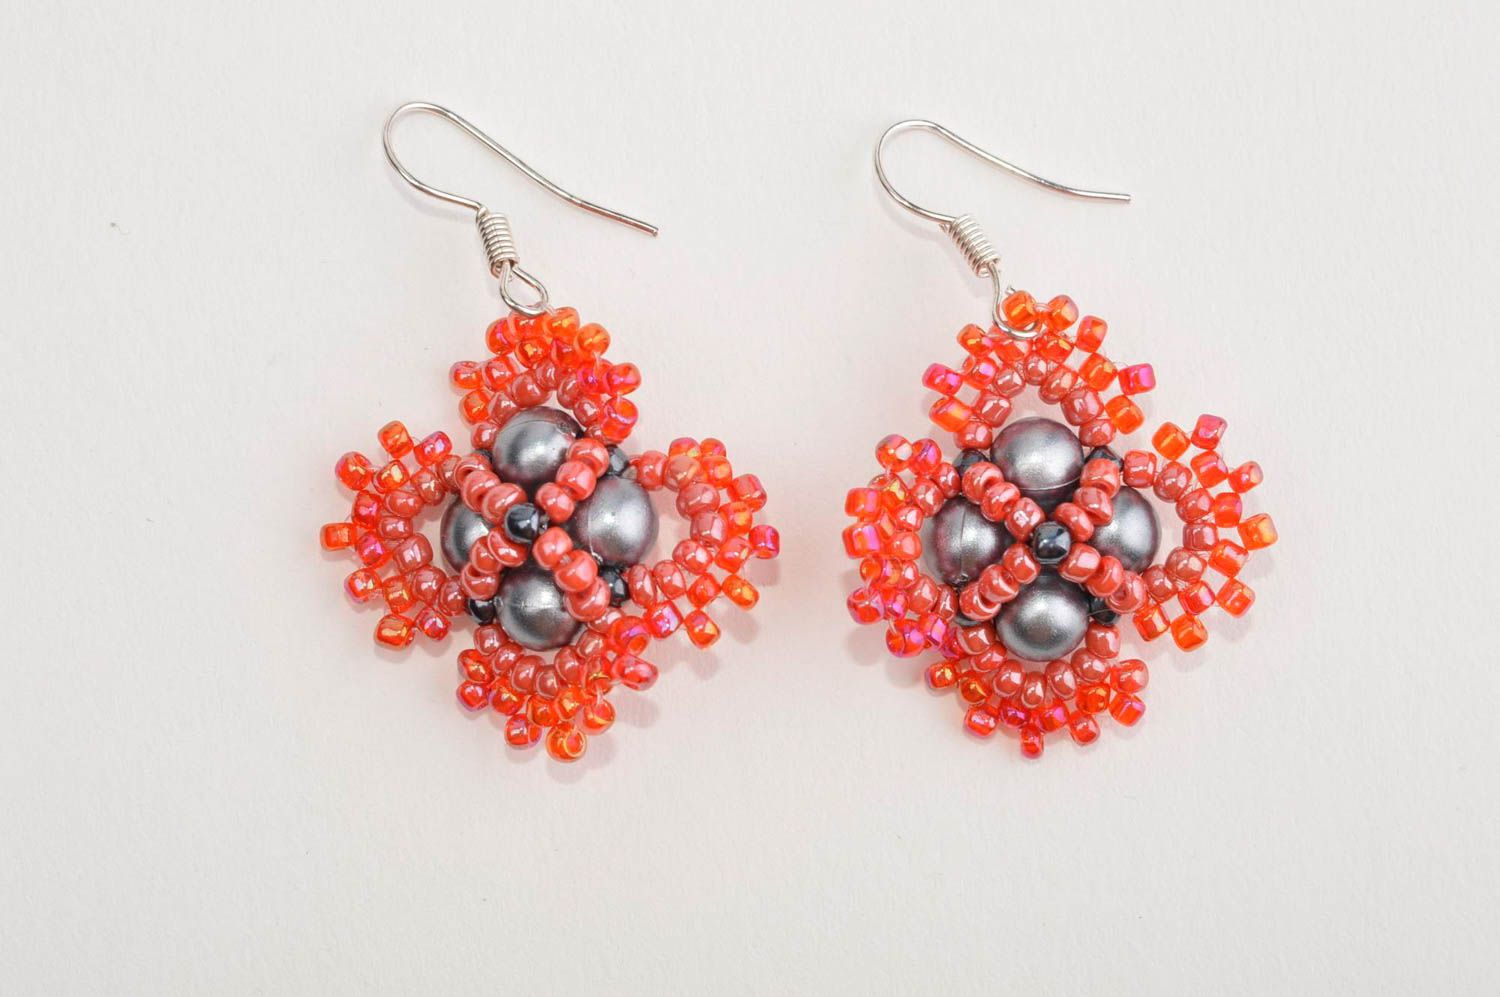 Fashion bijouterie handmade earrings with charms elegant earrings made of beads photo 2